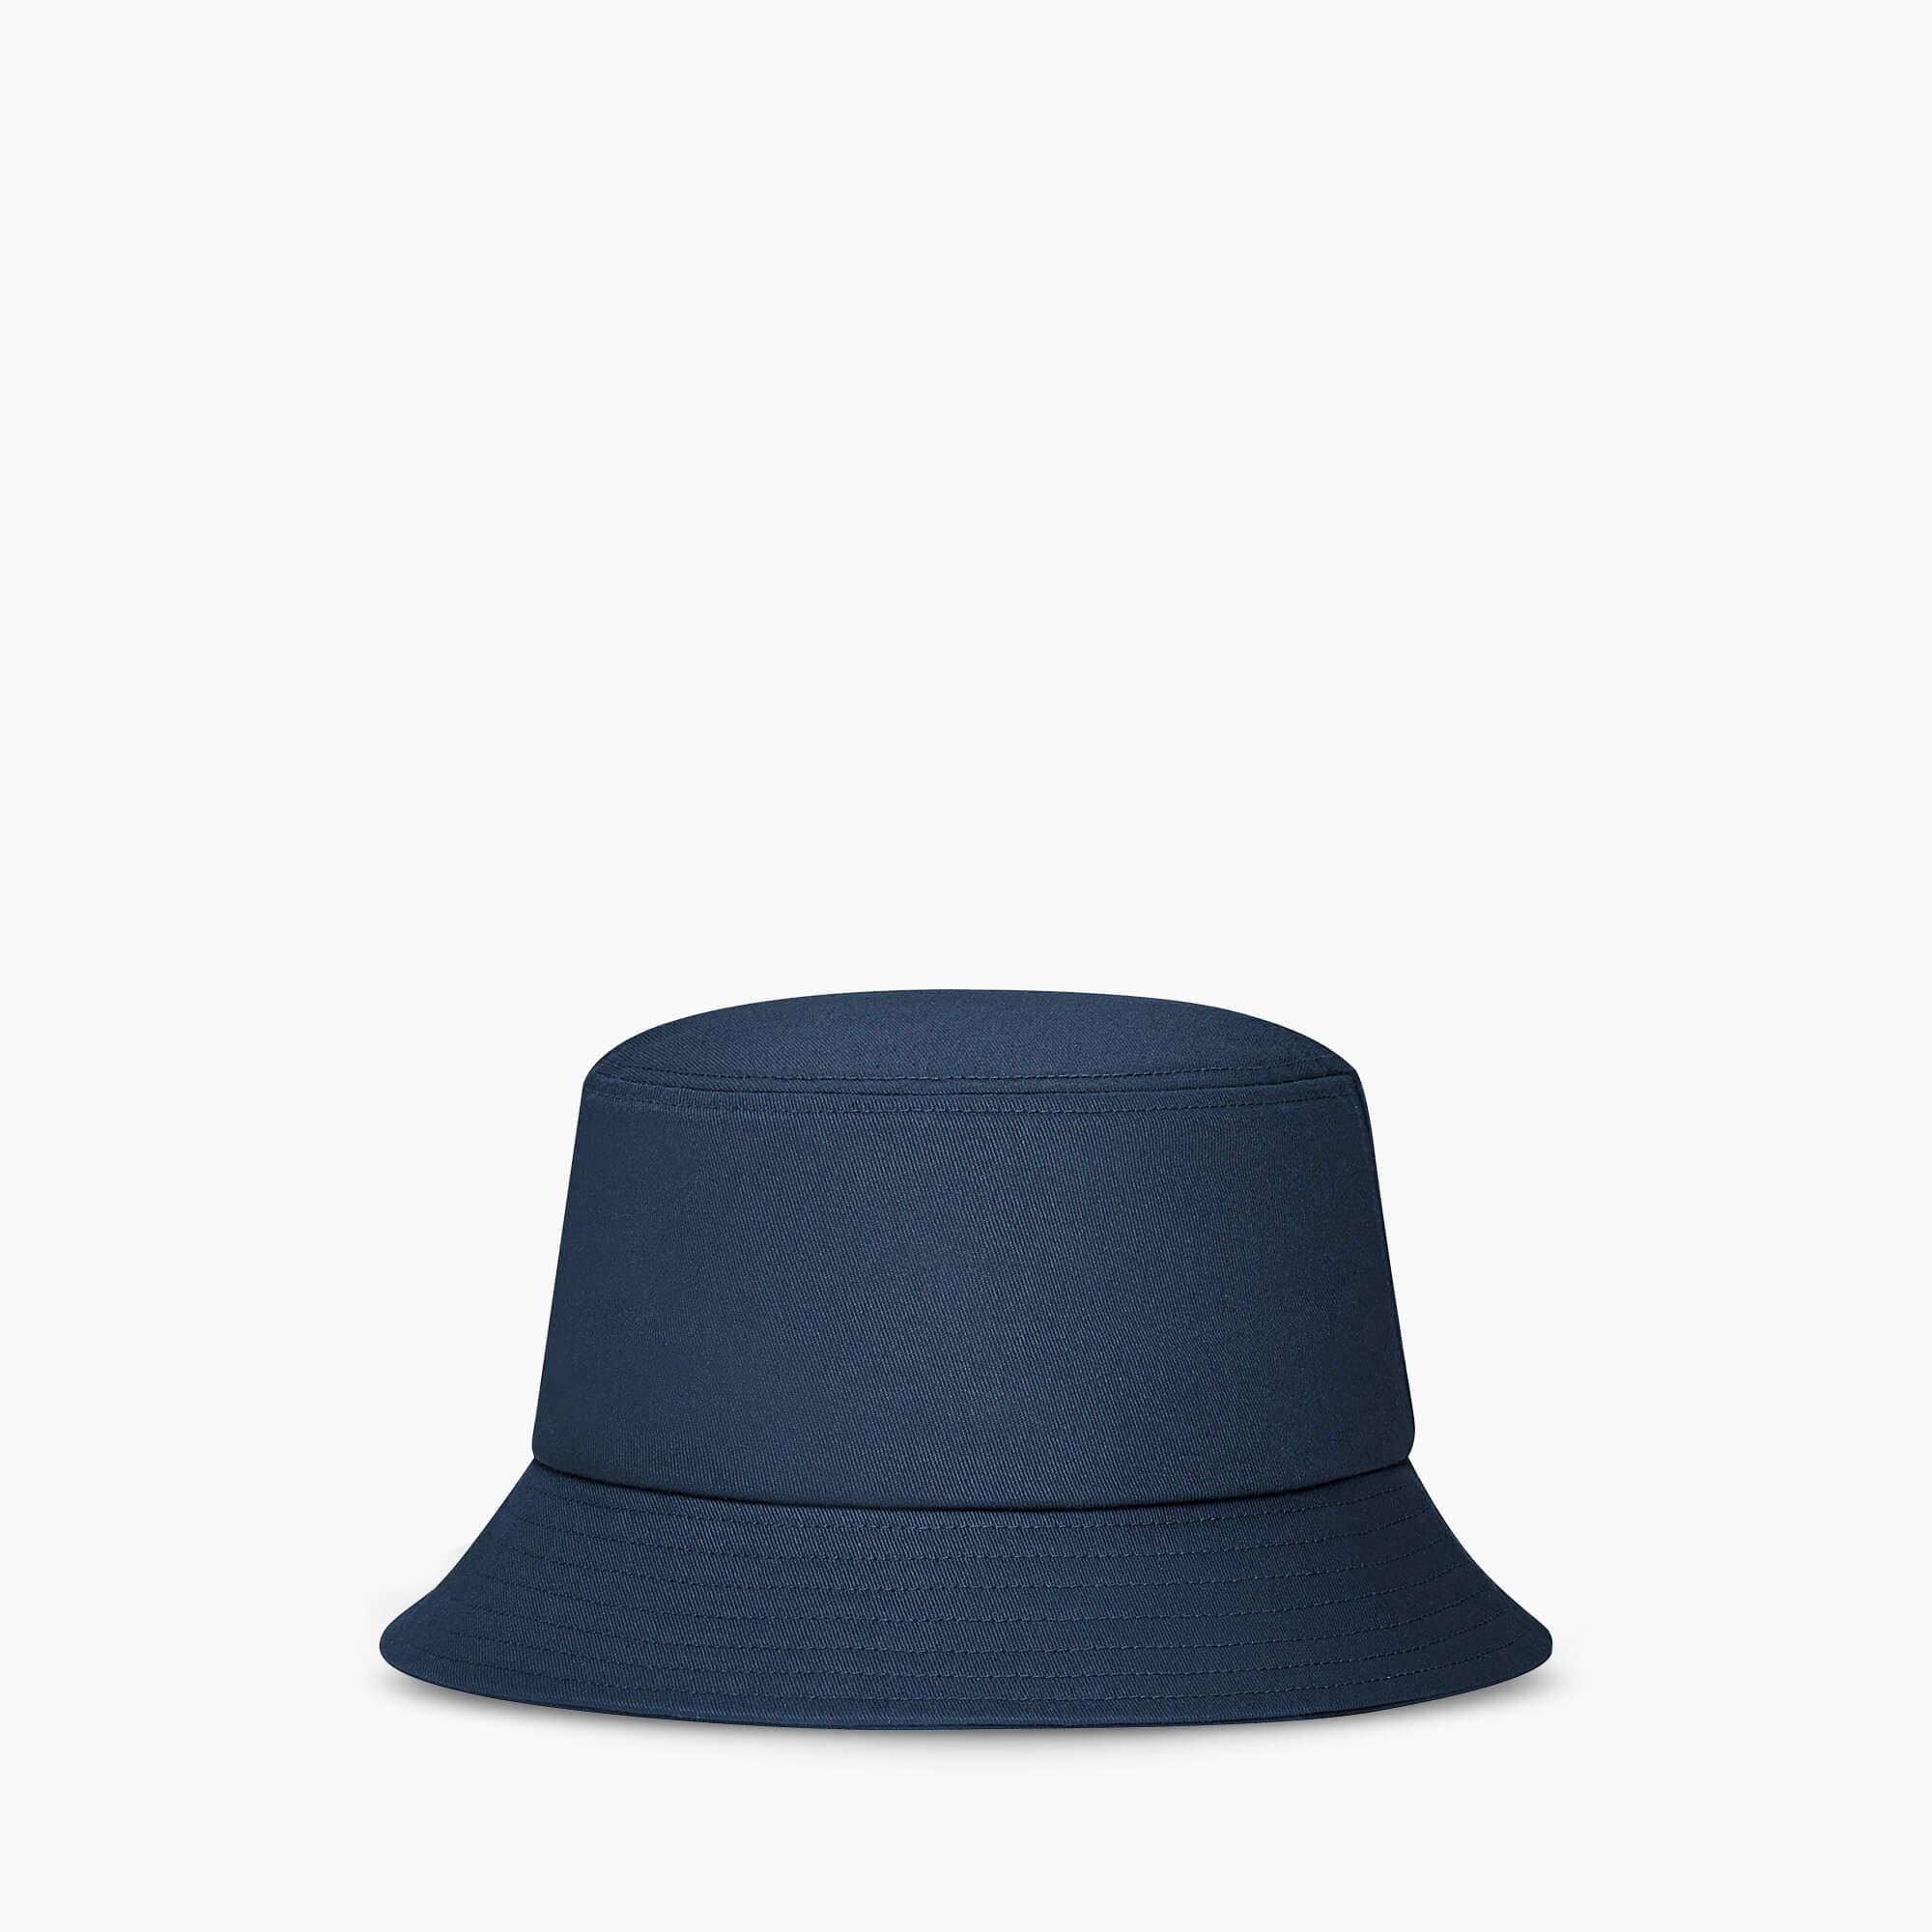 Cotton Sun hat For Summer